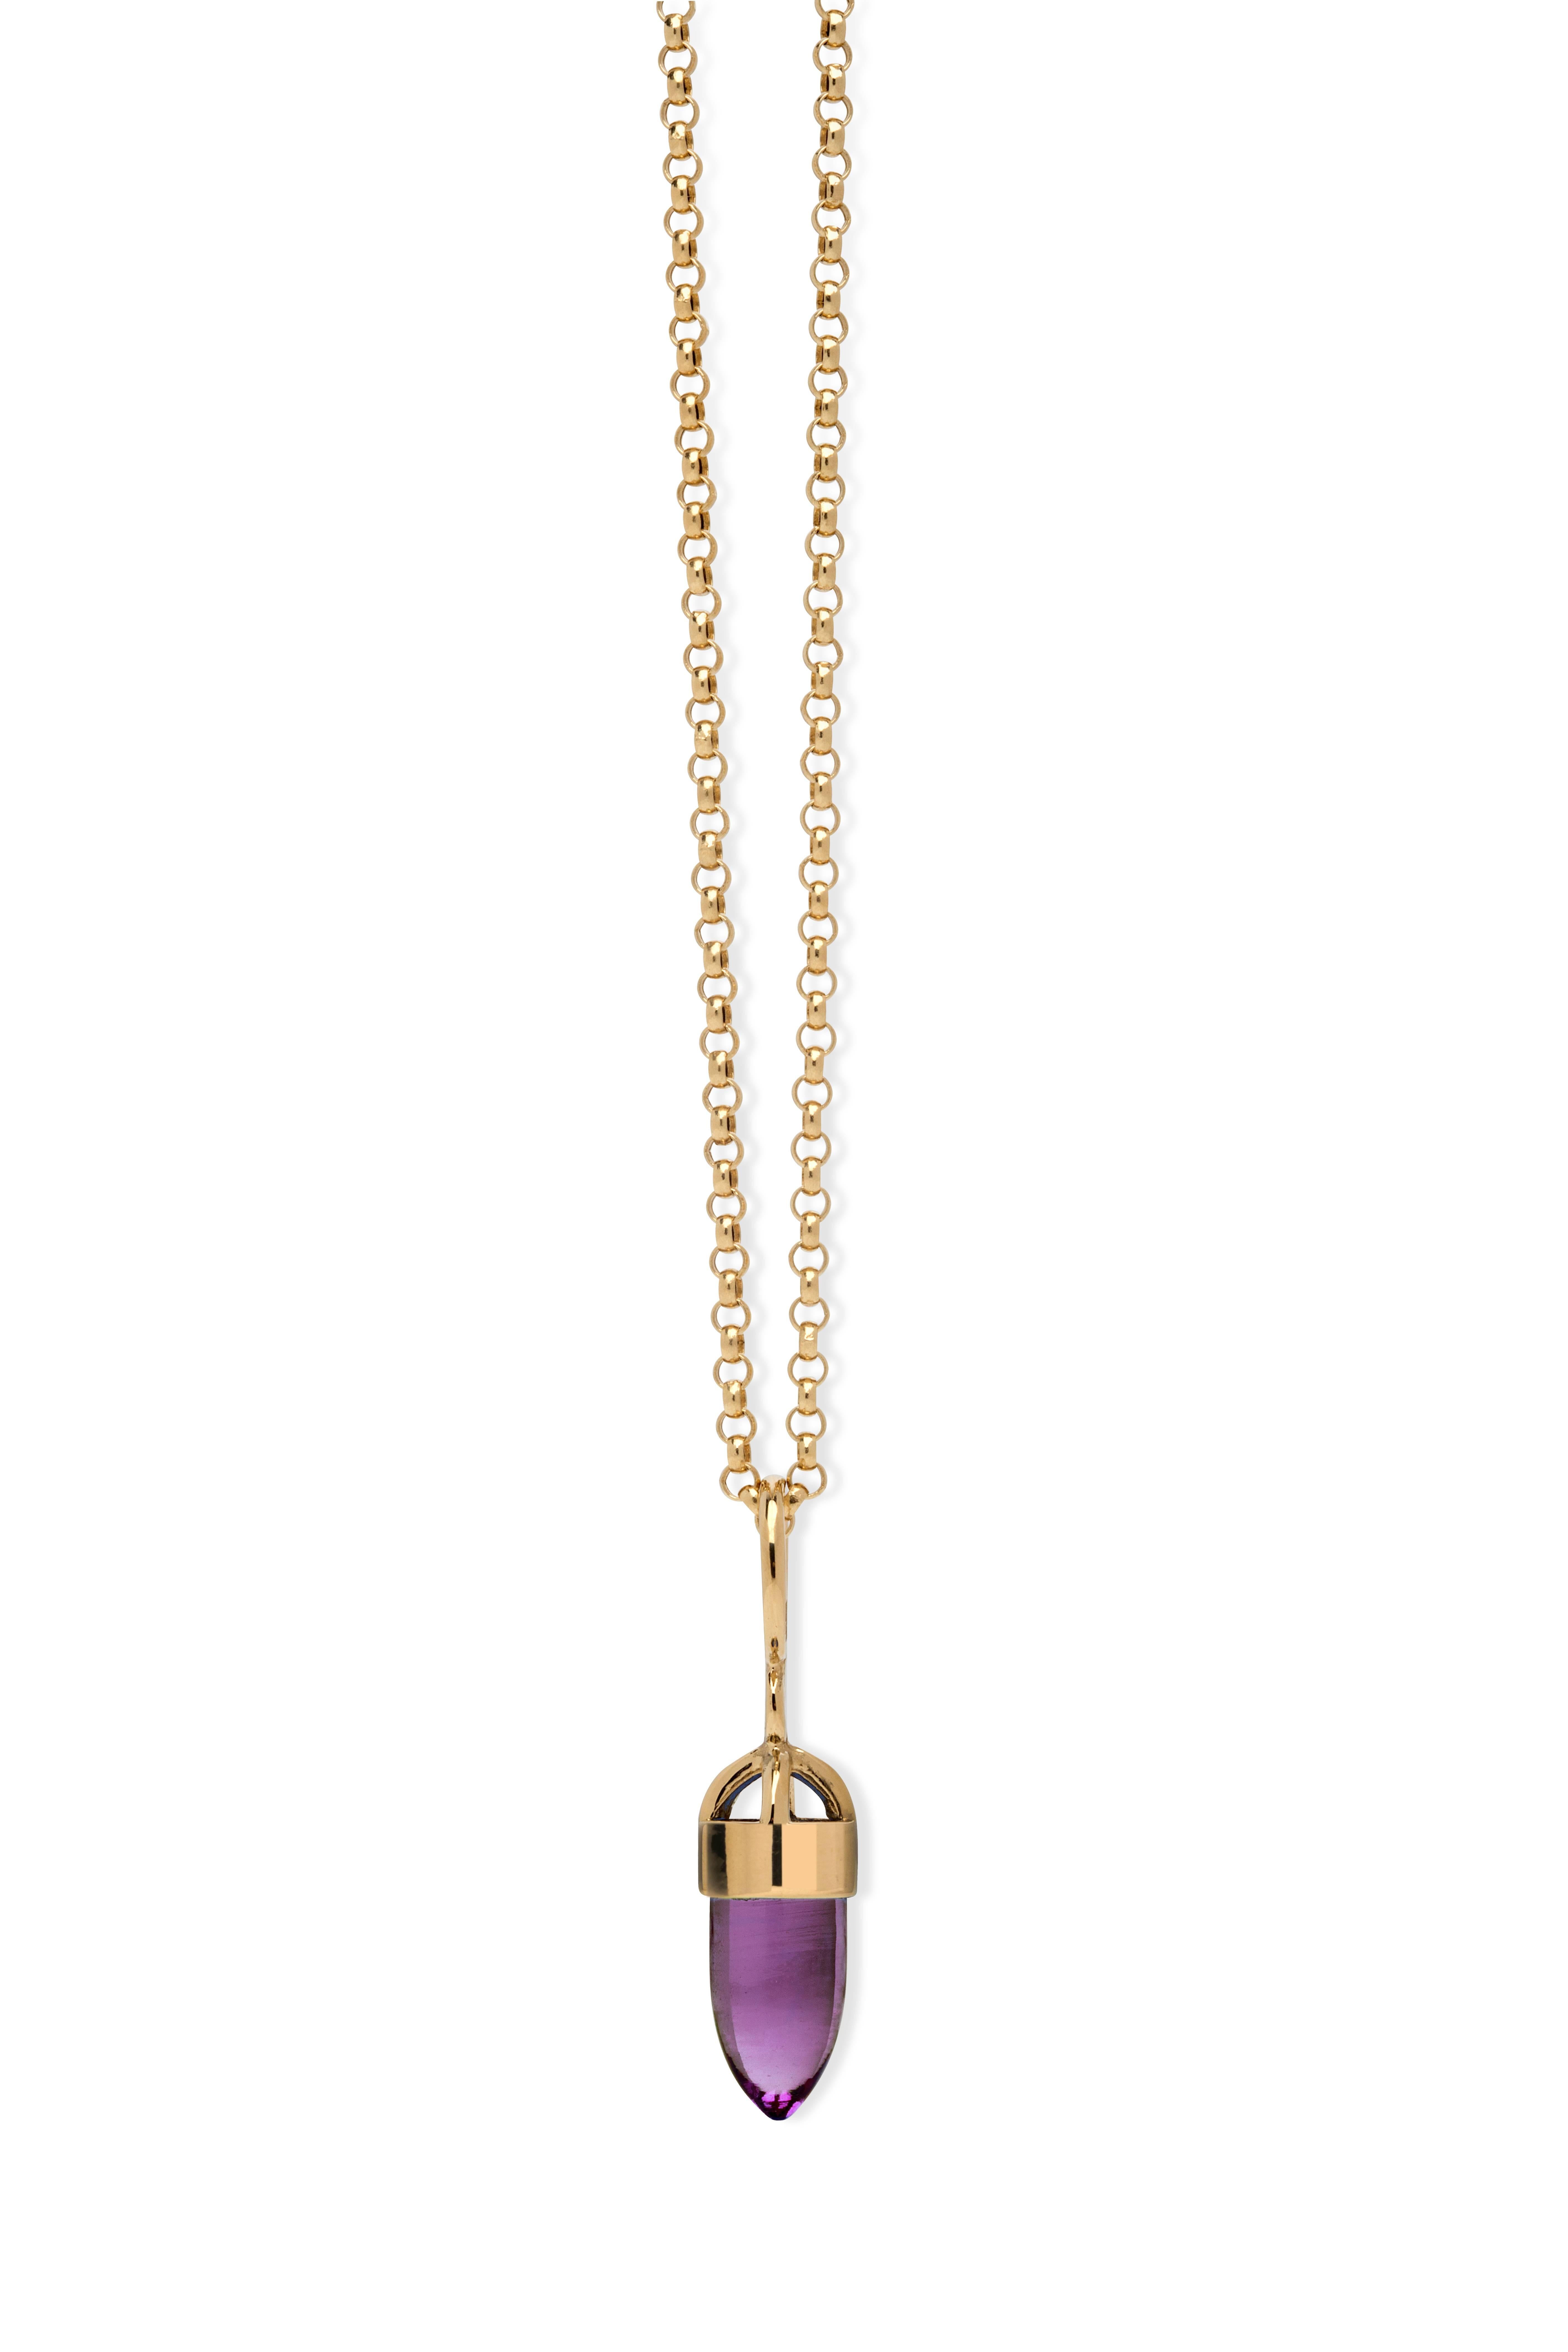 MAVIADA's Modern Minimalist Pink Stone 18 Karat Yellow Gold Pendant Necklace For Sale 2